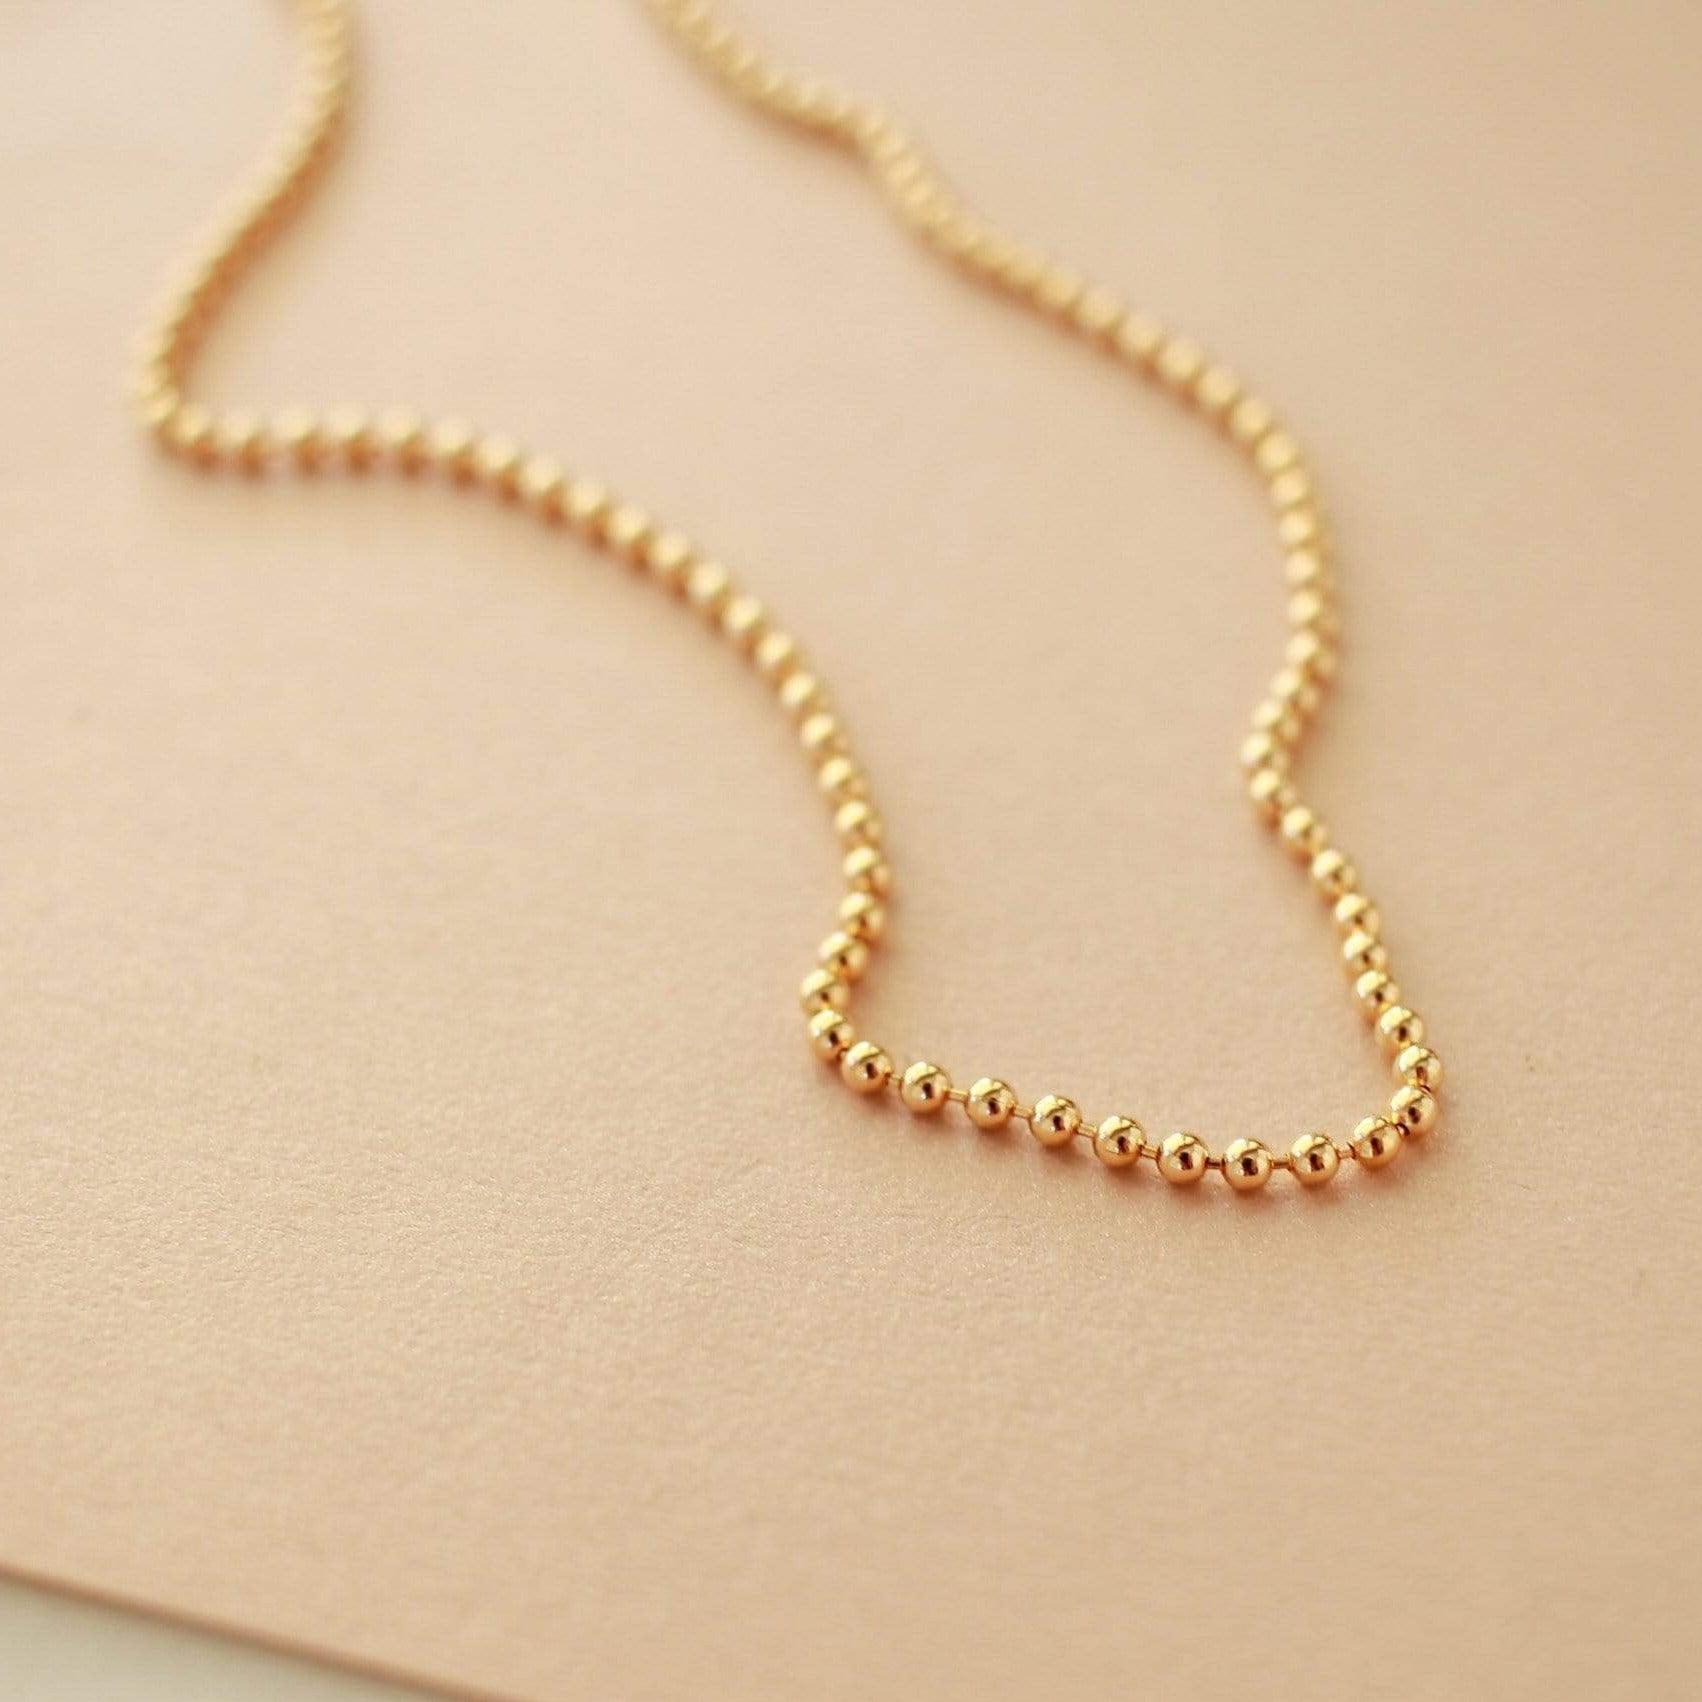 Nova Bead Necklace - Nolia Jewelry - Meaningful + Sustainably Handcrafted Jewelry